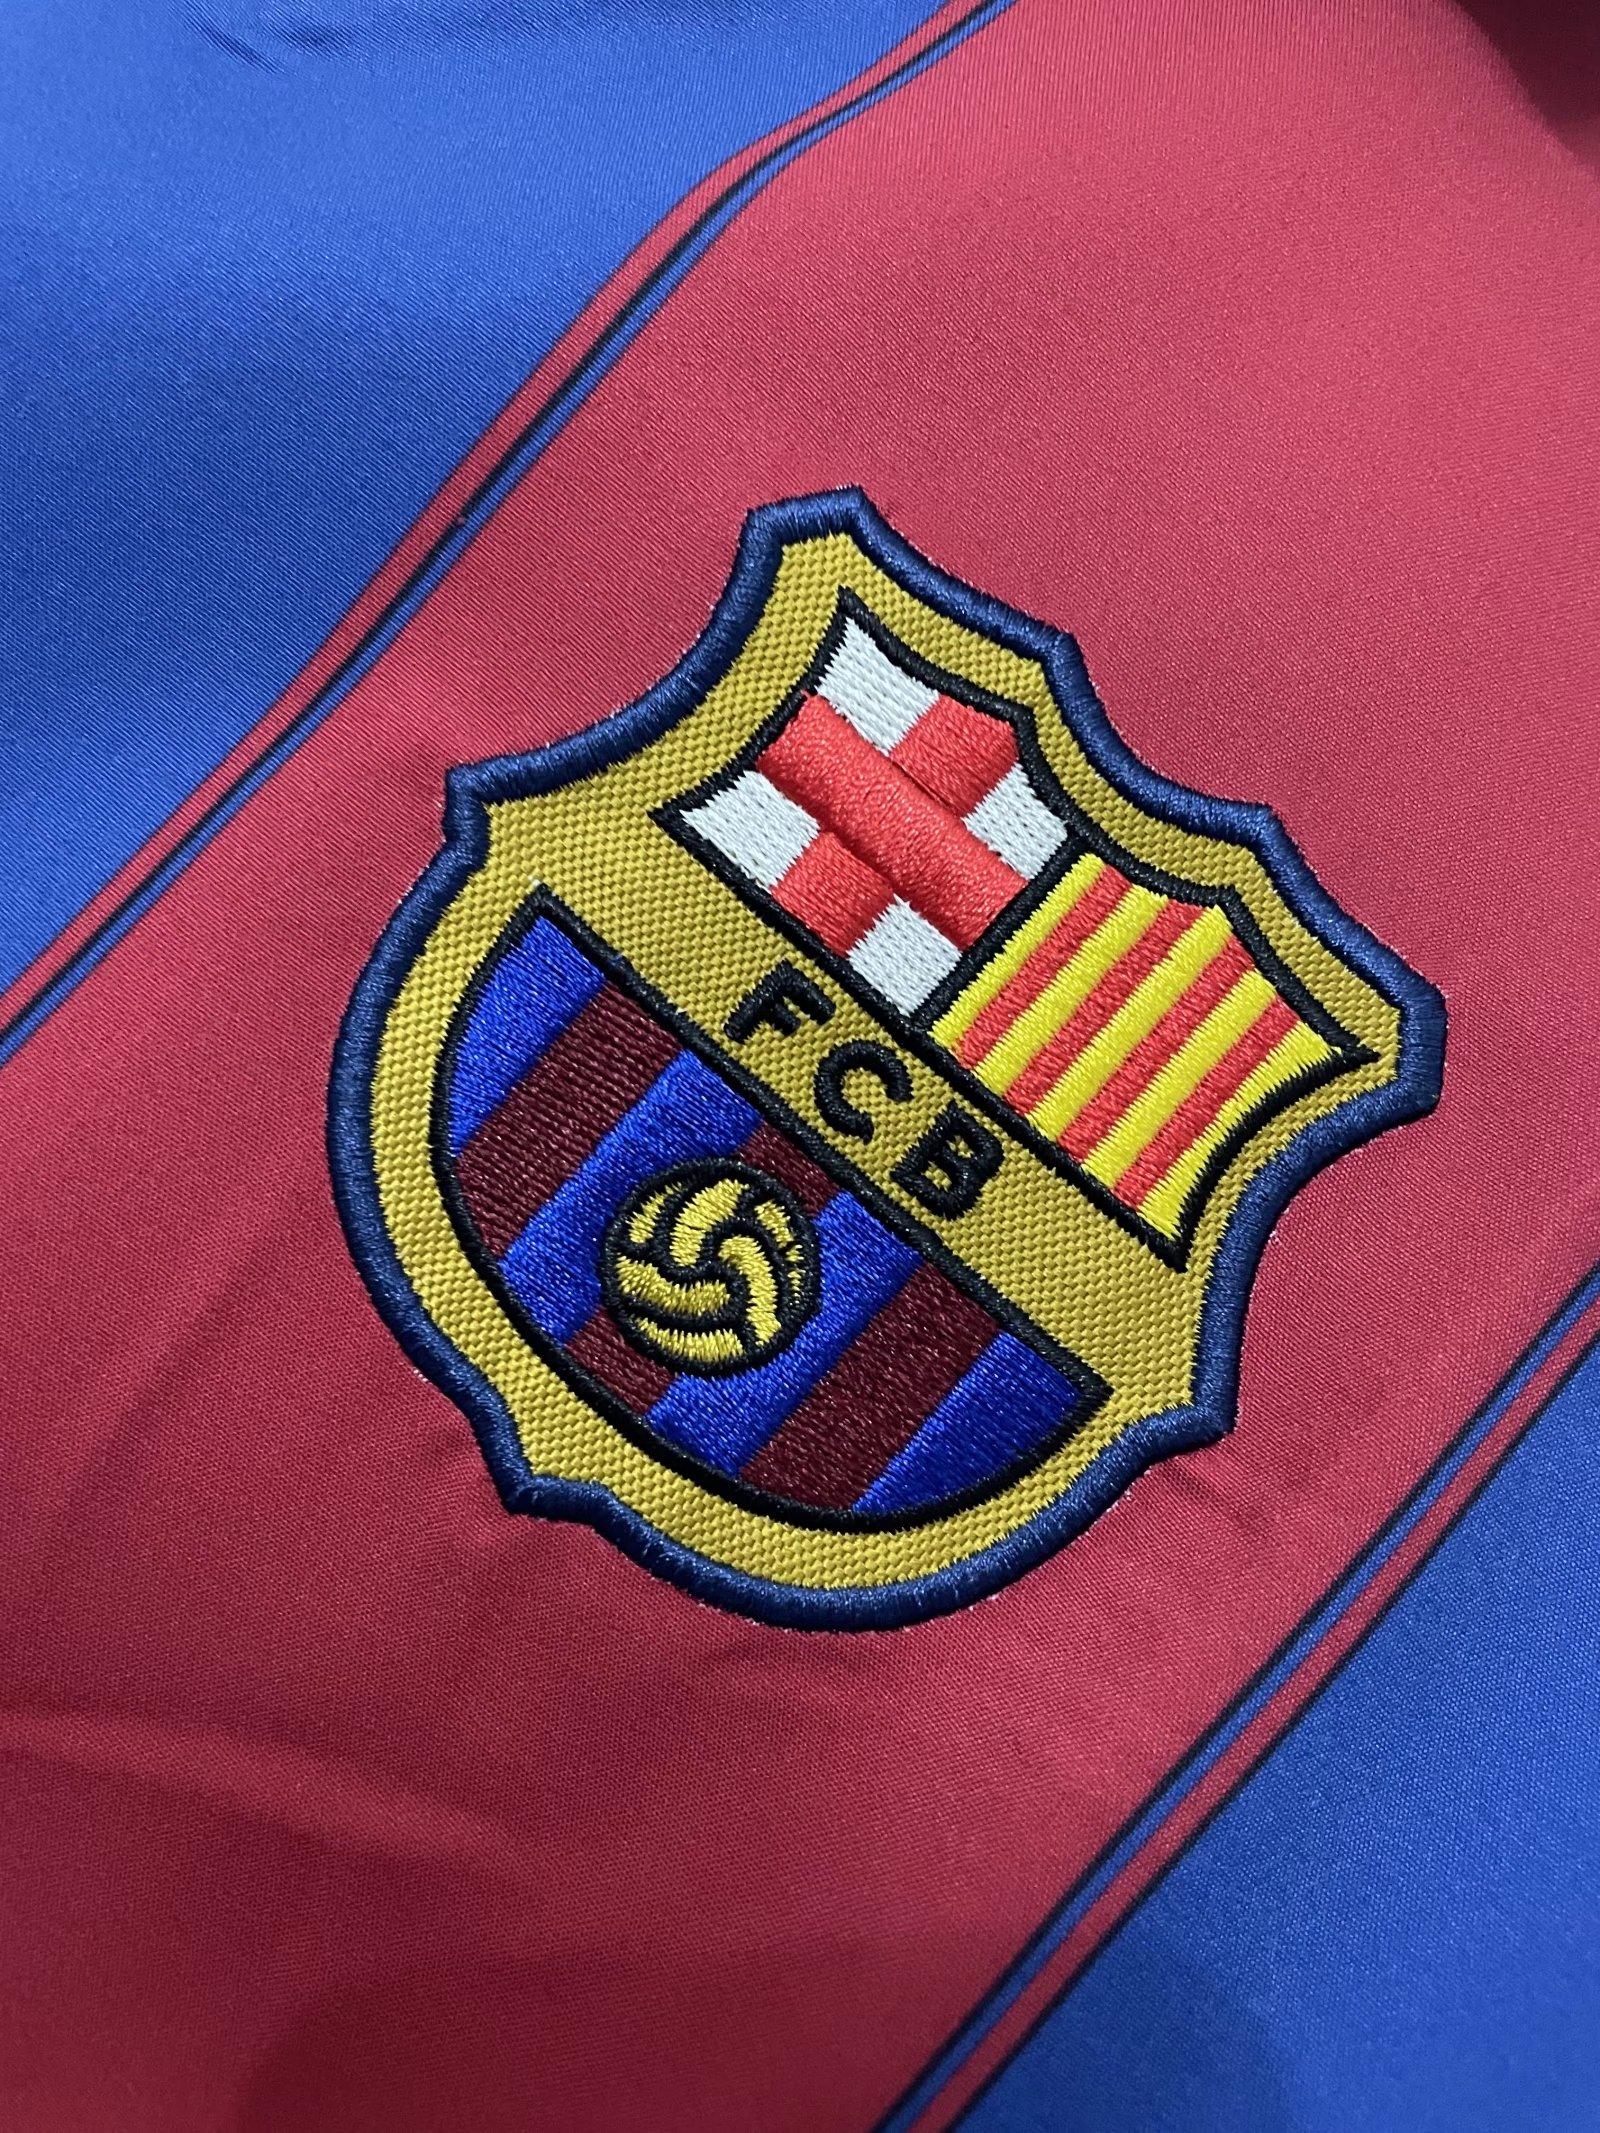 Barcelona Retro Home Mens Soccer Jersey Replica 2003/2004